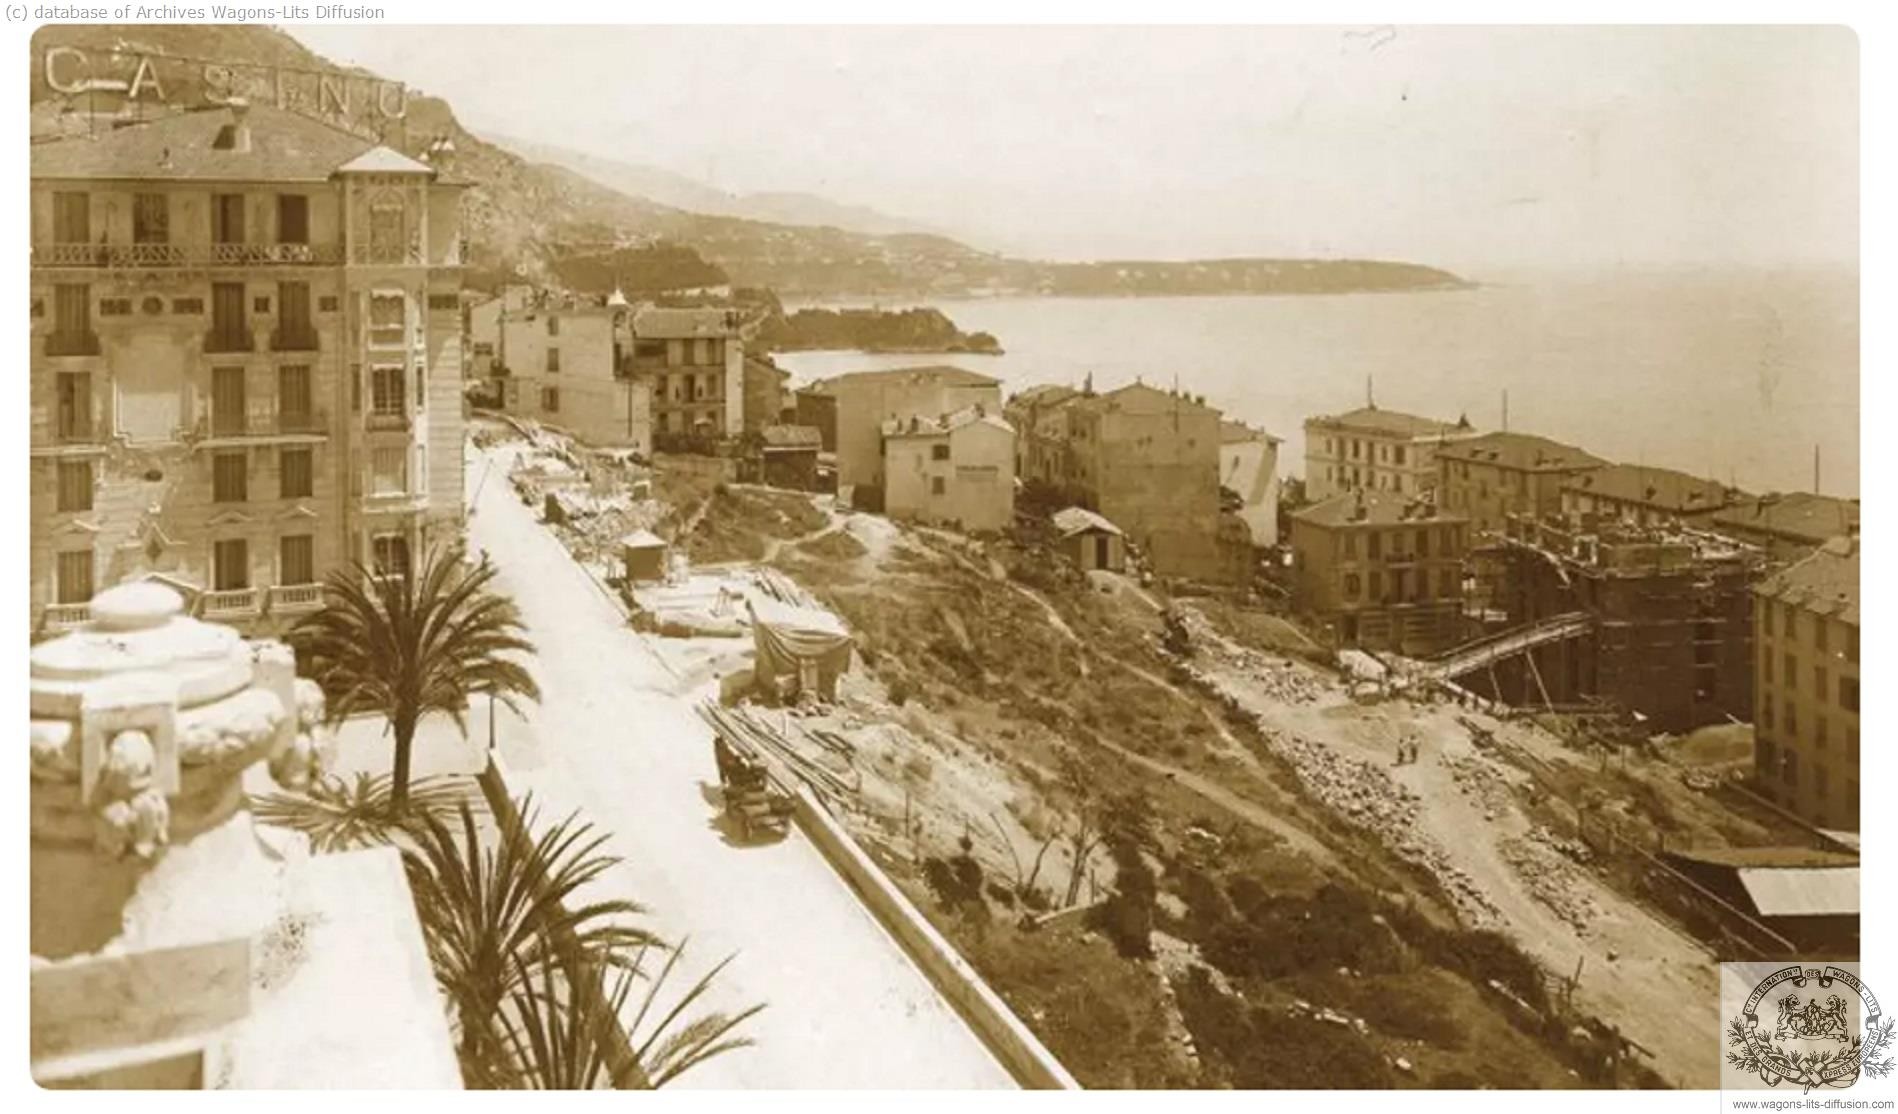 Wl construction de l hotel beausoleil a monaco en 1906